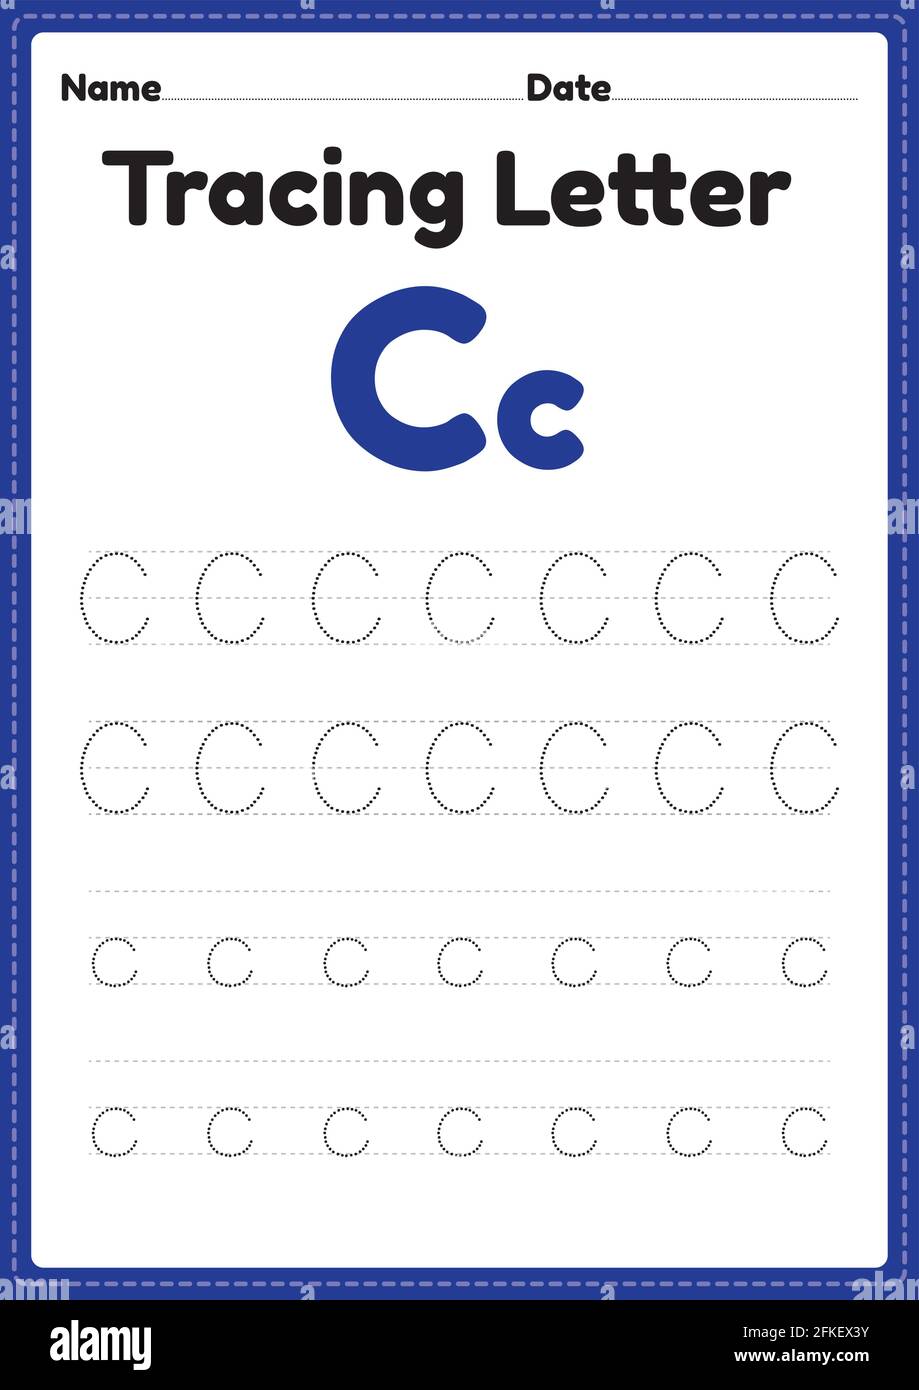 Tracing letter c alphabet worksheet for kindergarten and preschool Throughout Letter D Worksheet For Preschool